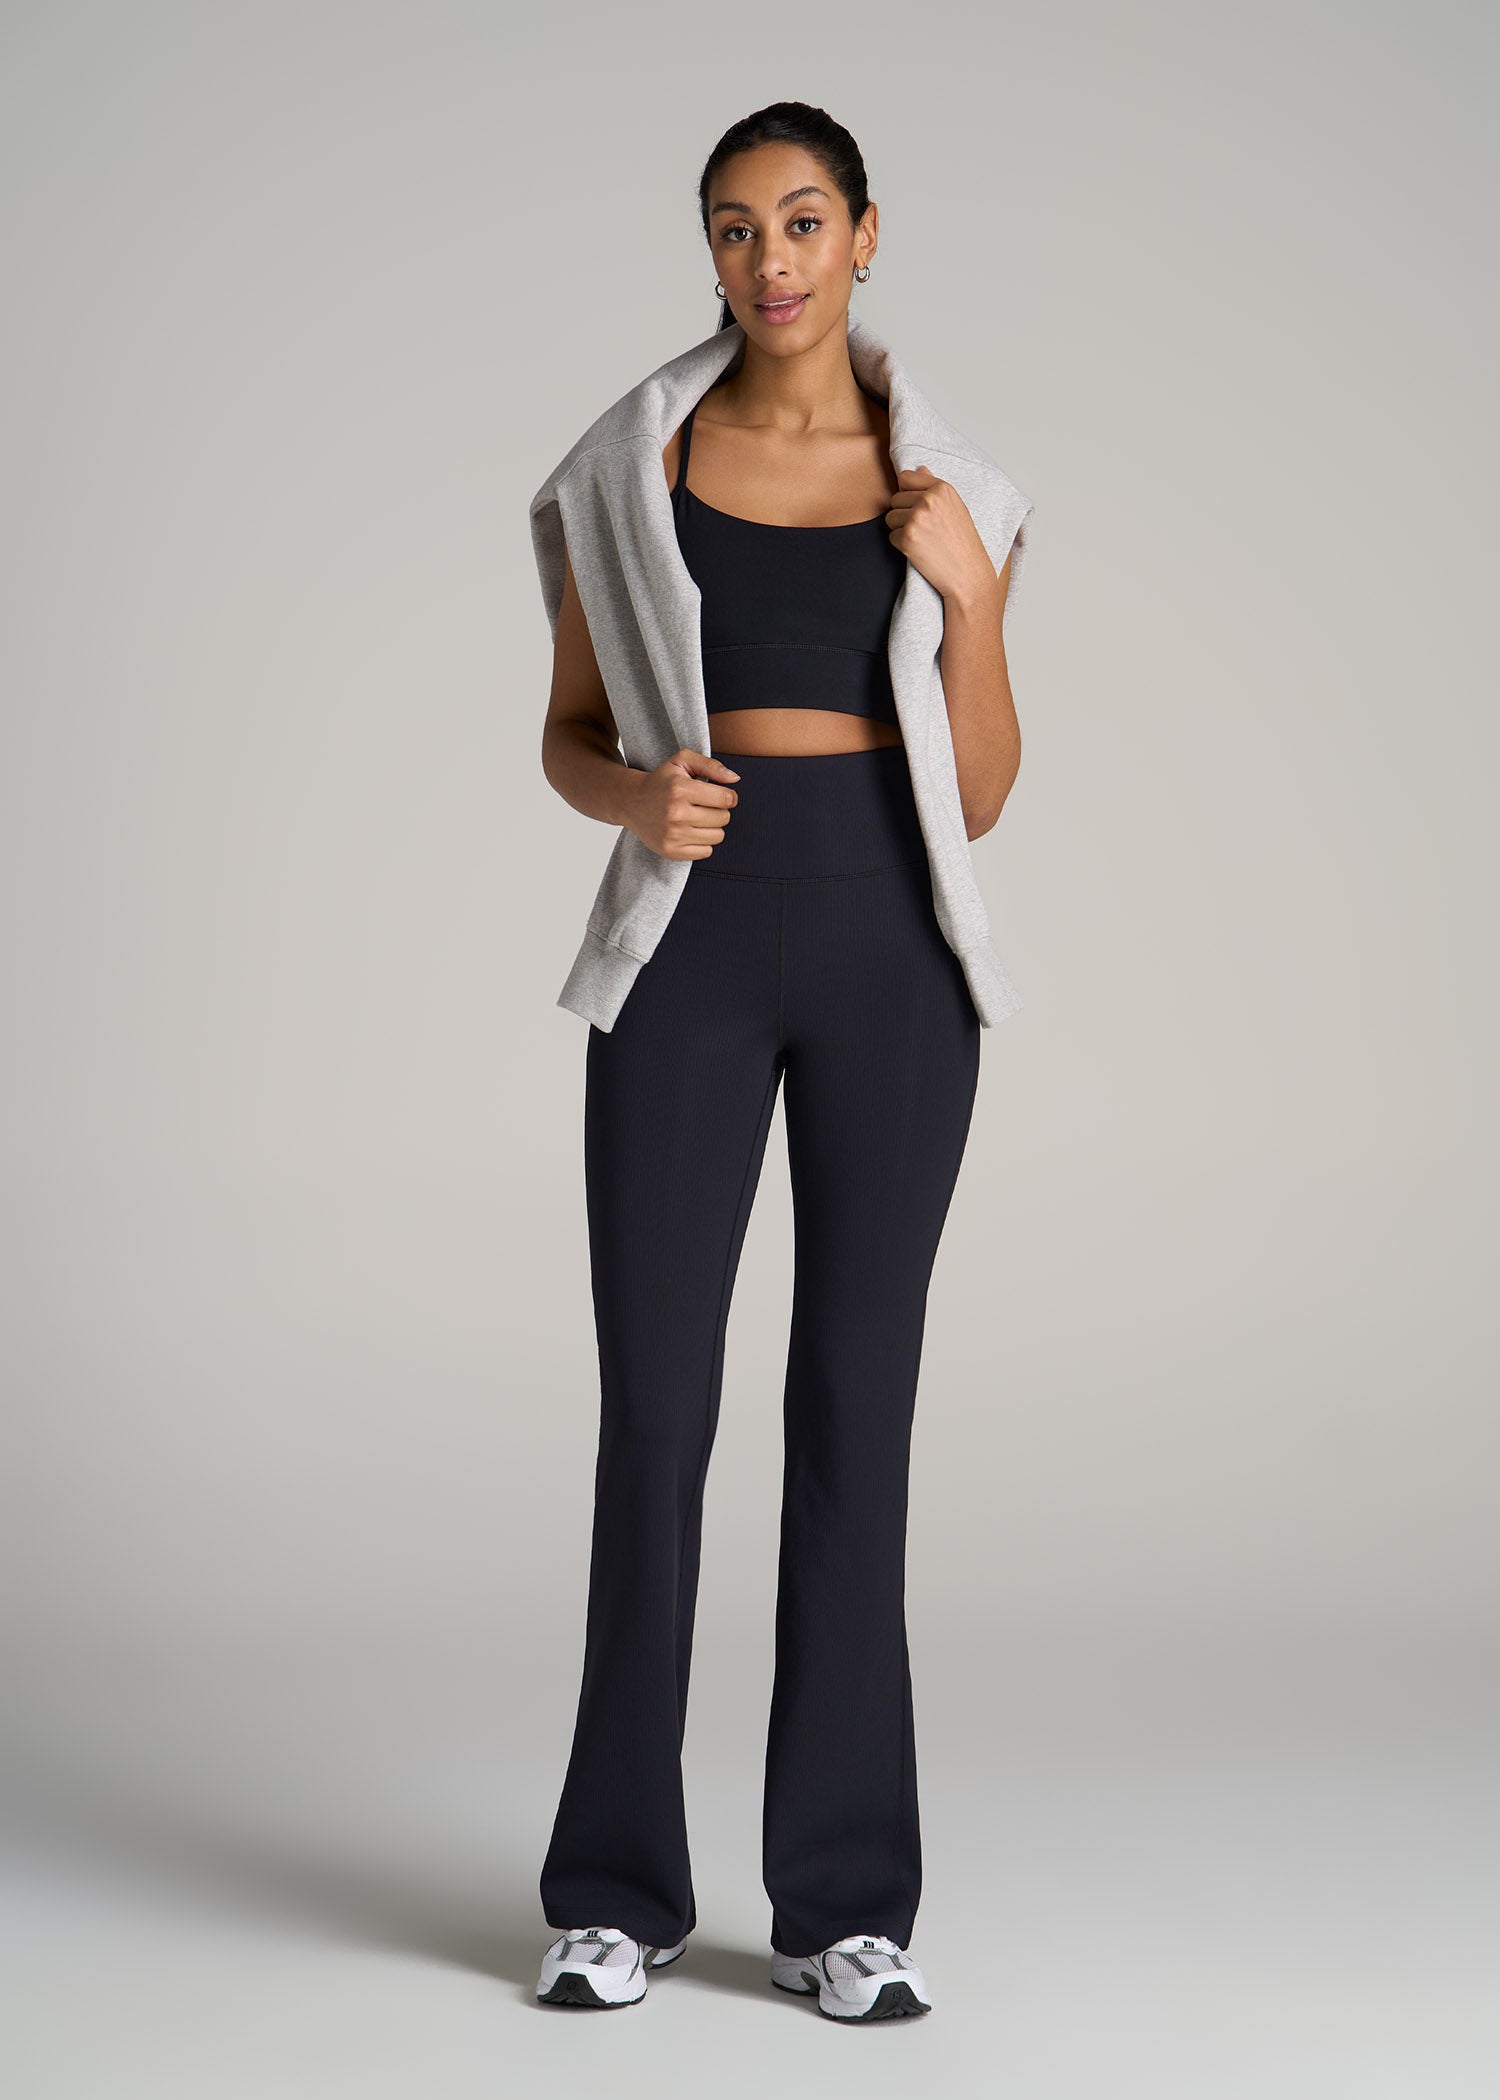 Women's Yoga Pants: Tall Black Yoga Pants, American Tall